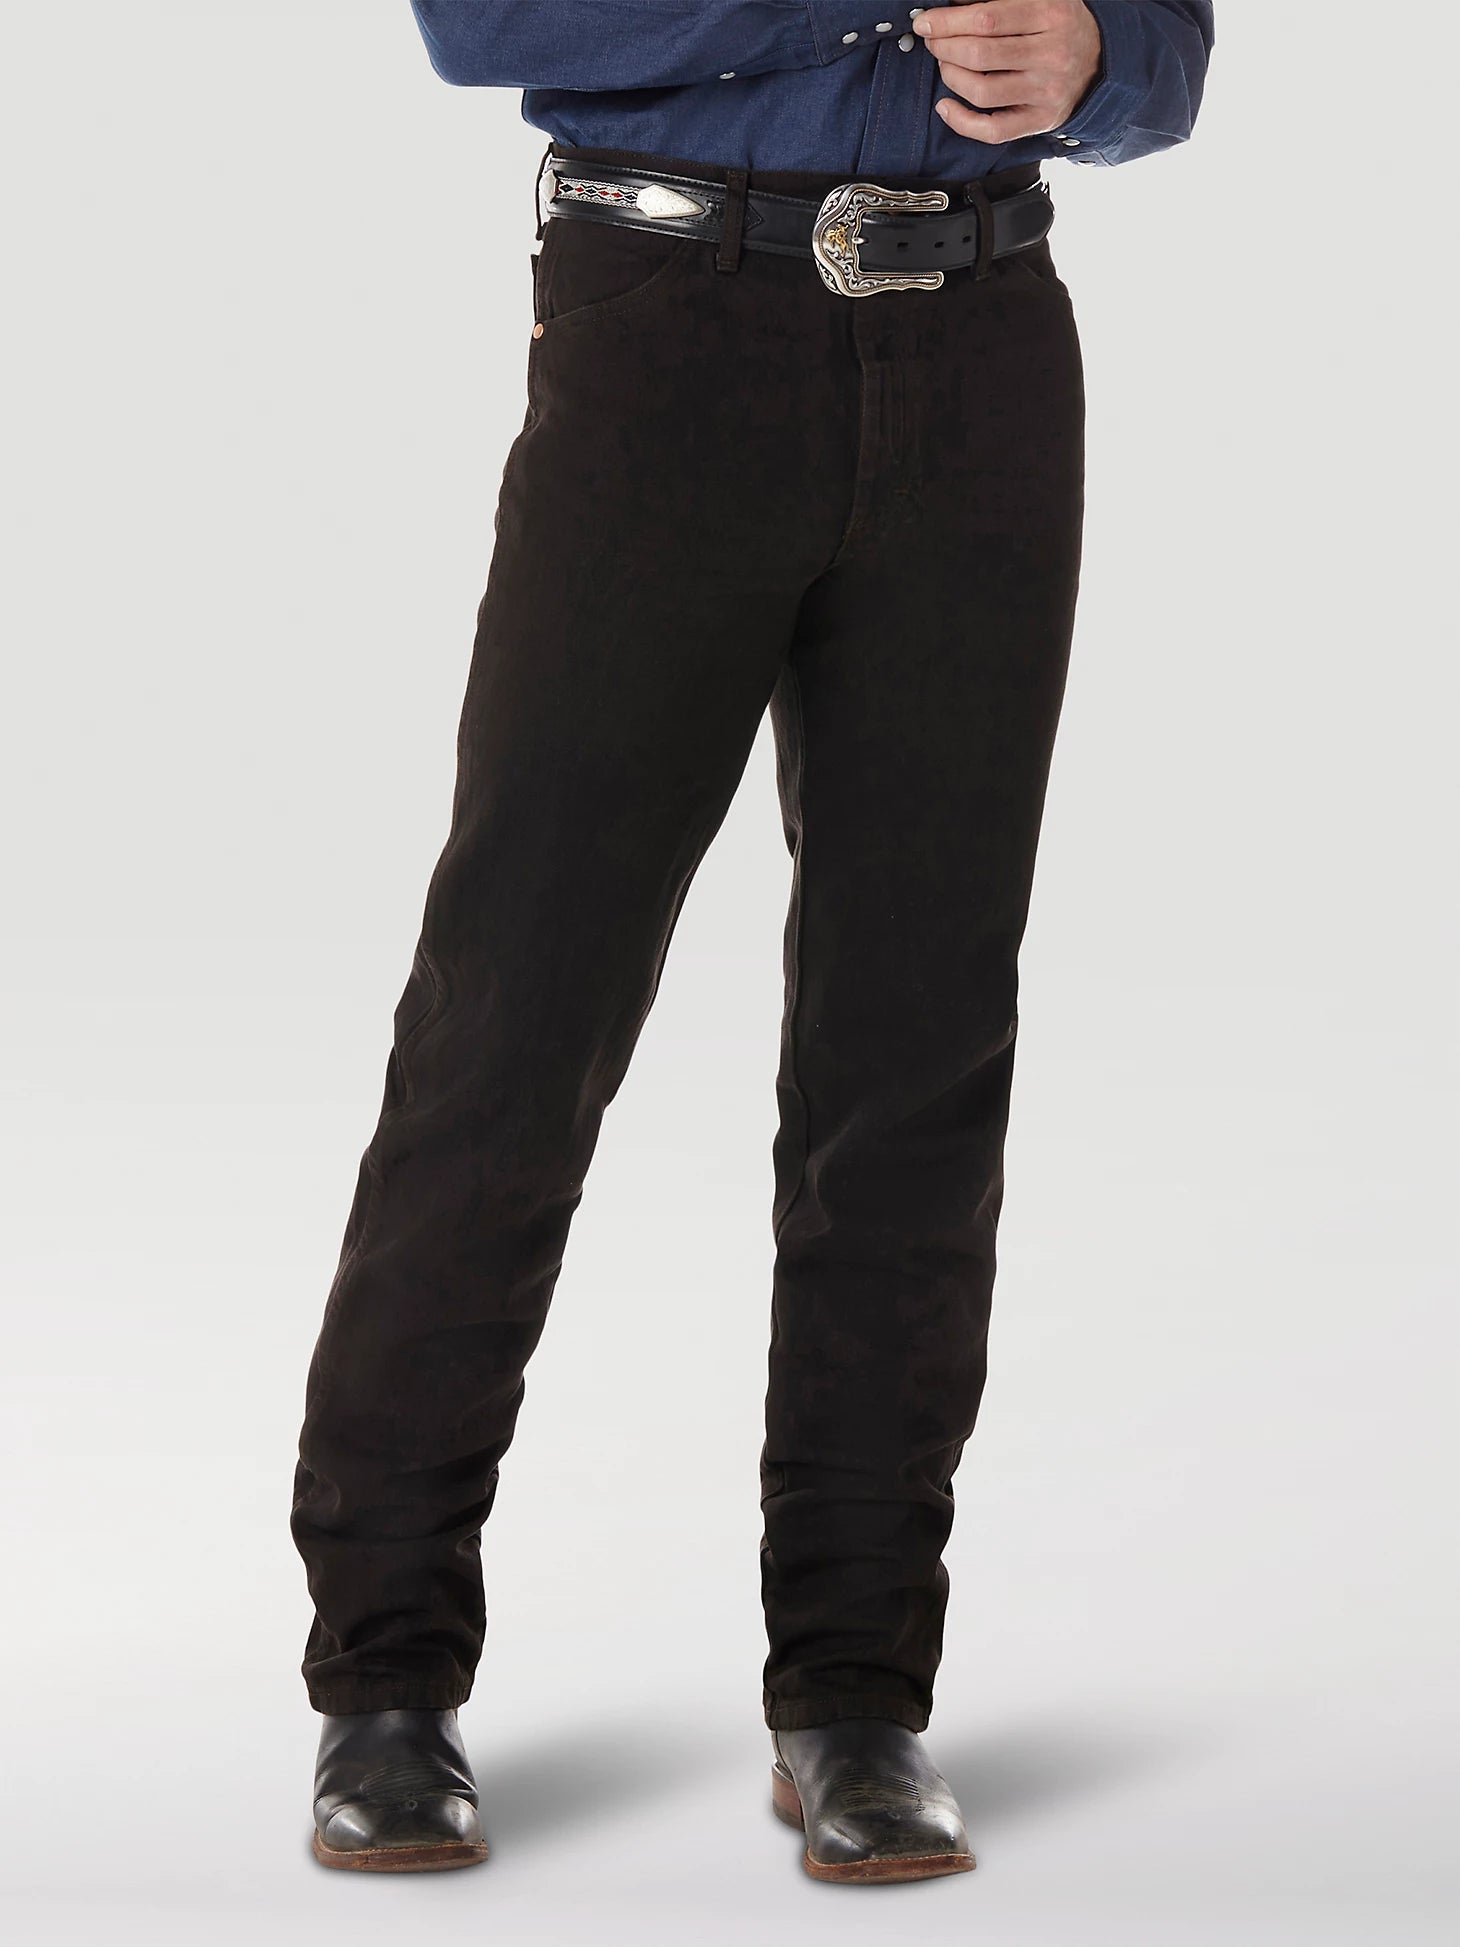 Jeans Wrangler Original Fit Black Chocolate Caballero